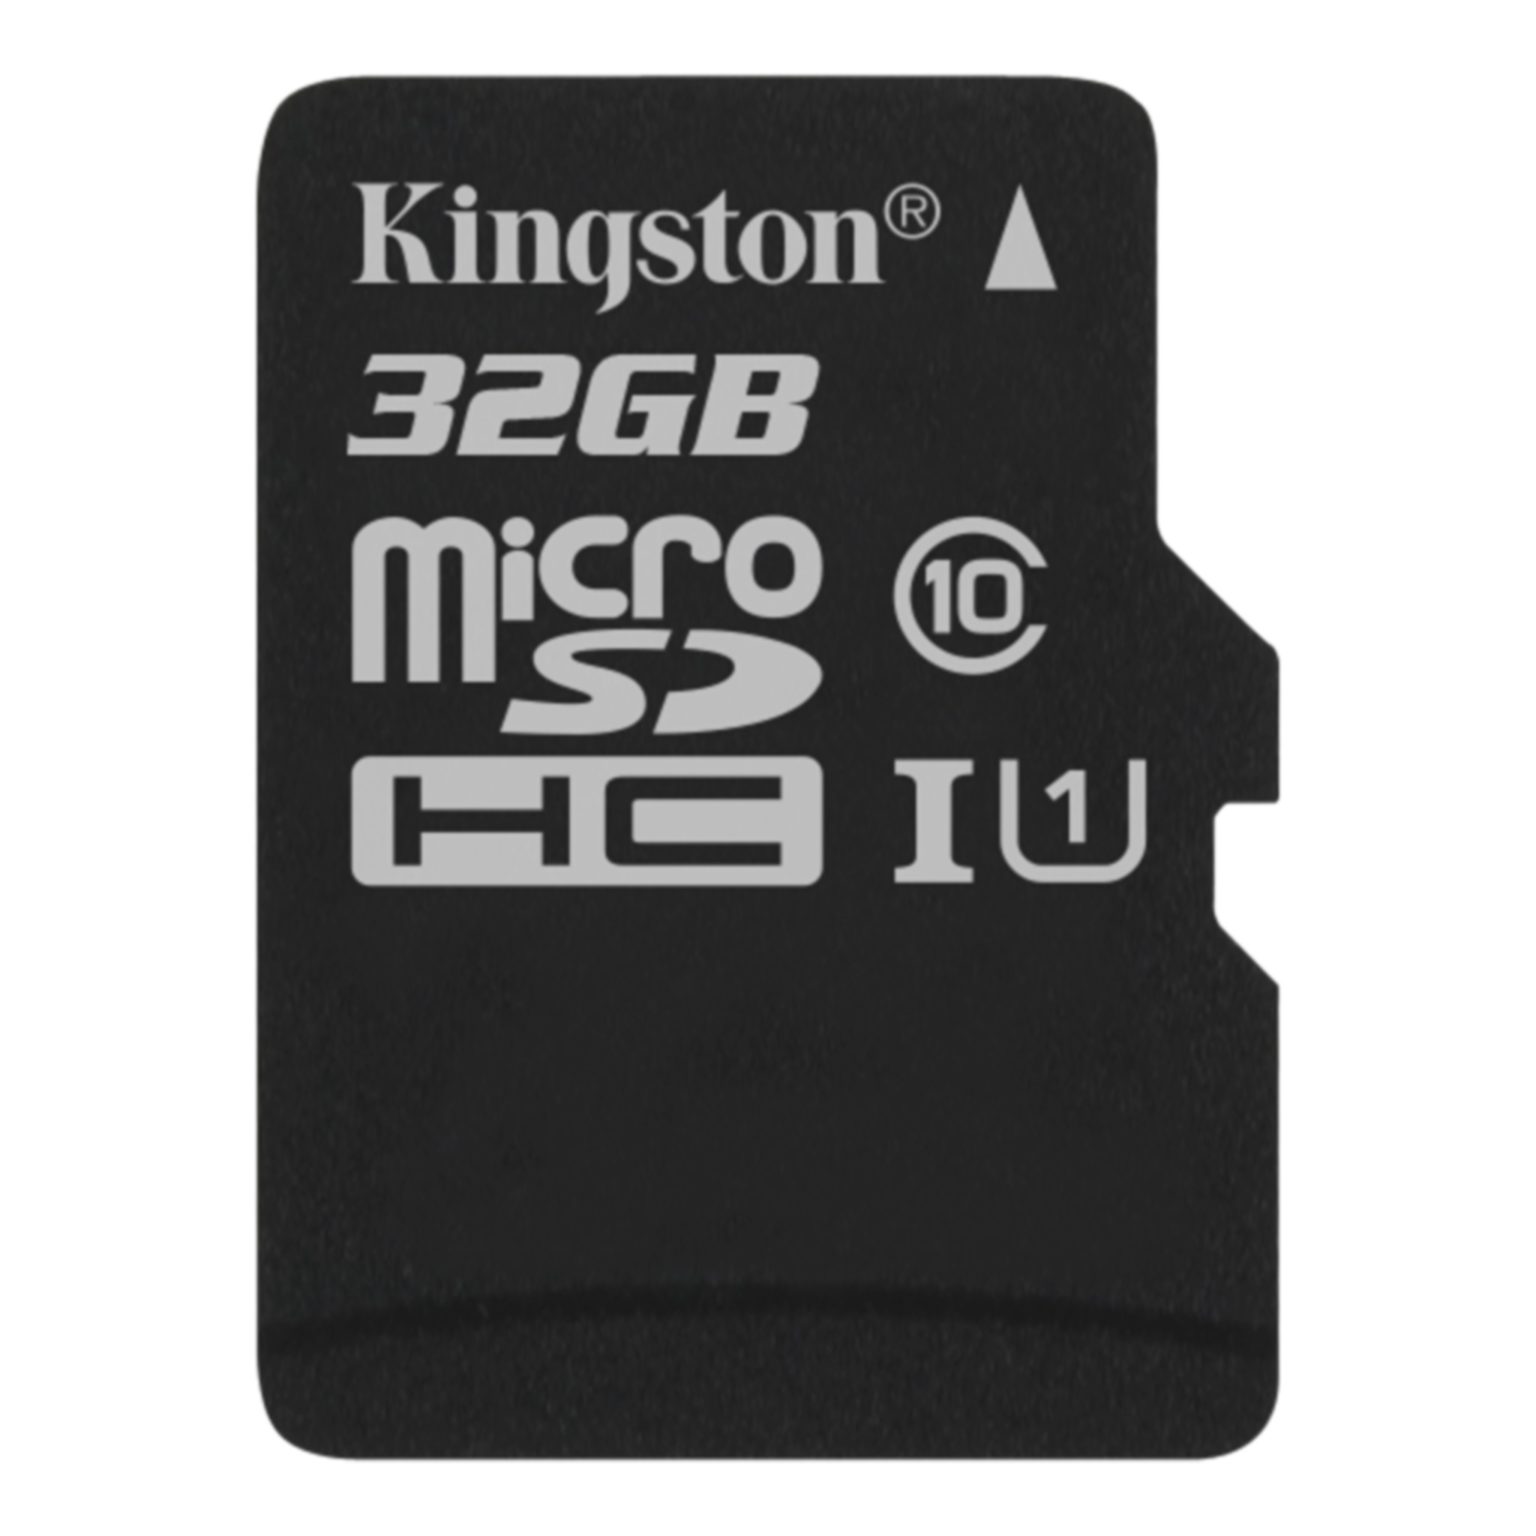 Микро sd классы. Kingston MICROSDHC 32gb class 10 UHS-I u1. MICROSDHC 8gb Kingston class 10. Карта памяти MICROSDHC 32gb class 10. Kingston MICROSD 32gb HC I.